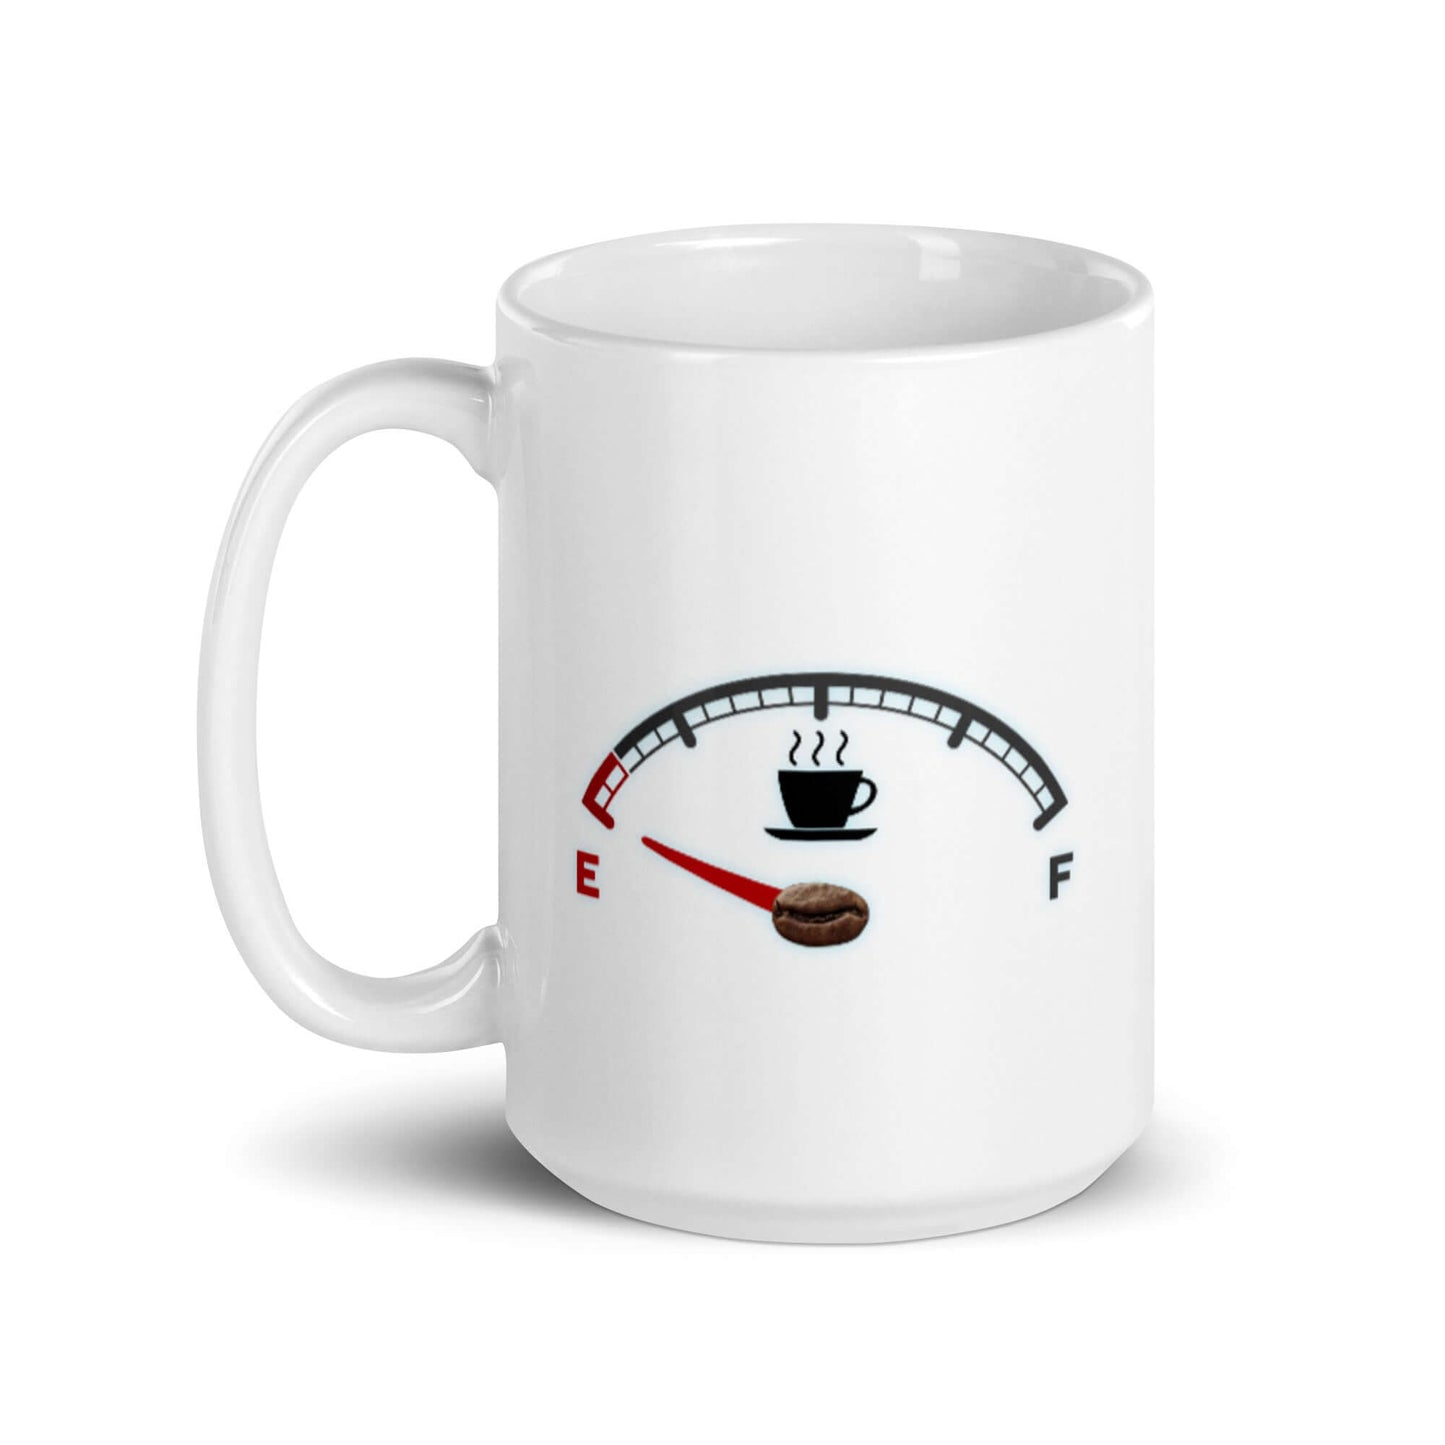 Running on empty, I NEED coffee! - White glossy mug - Horrible Designs